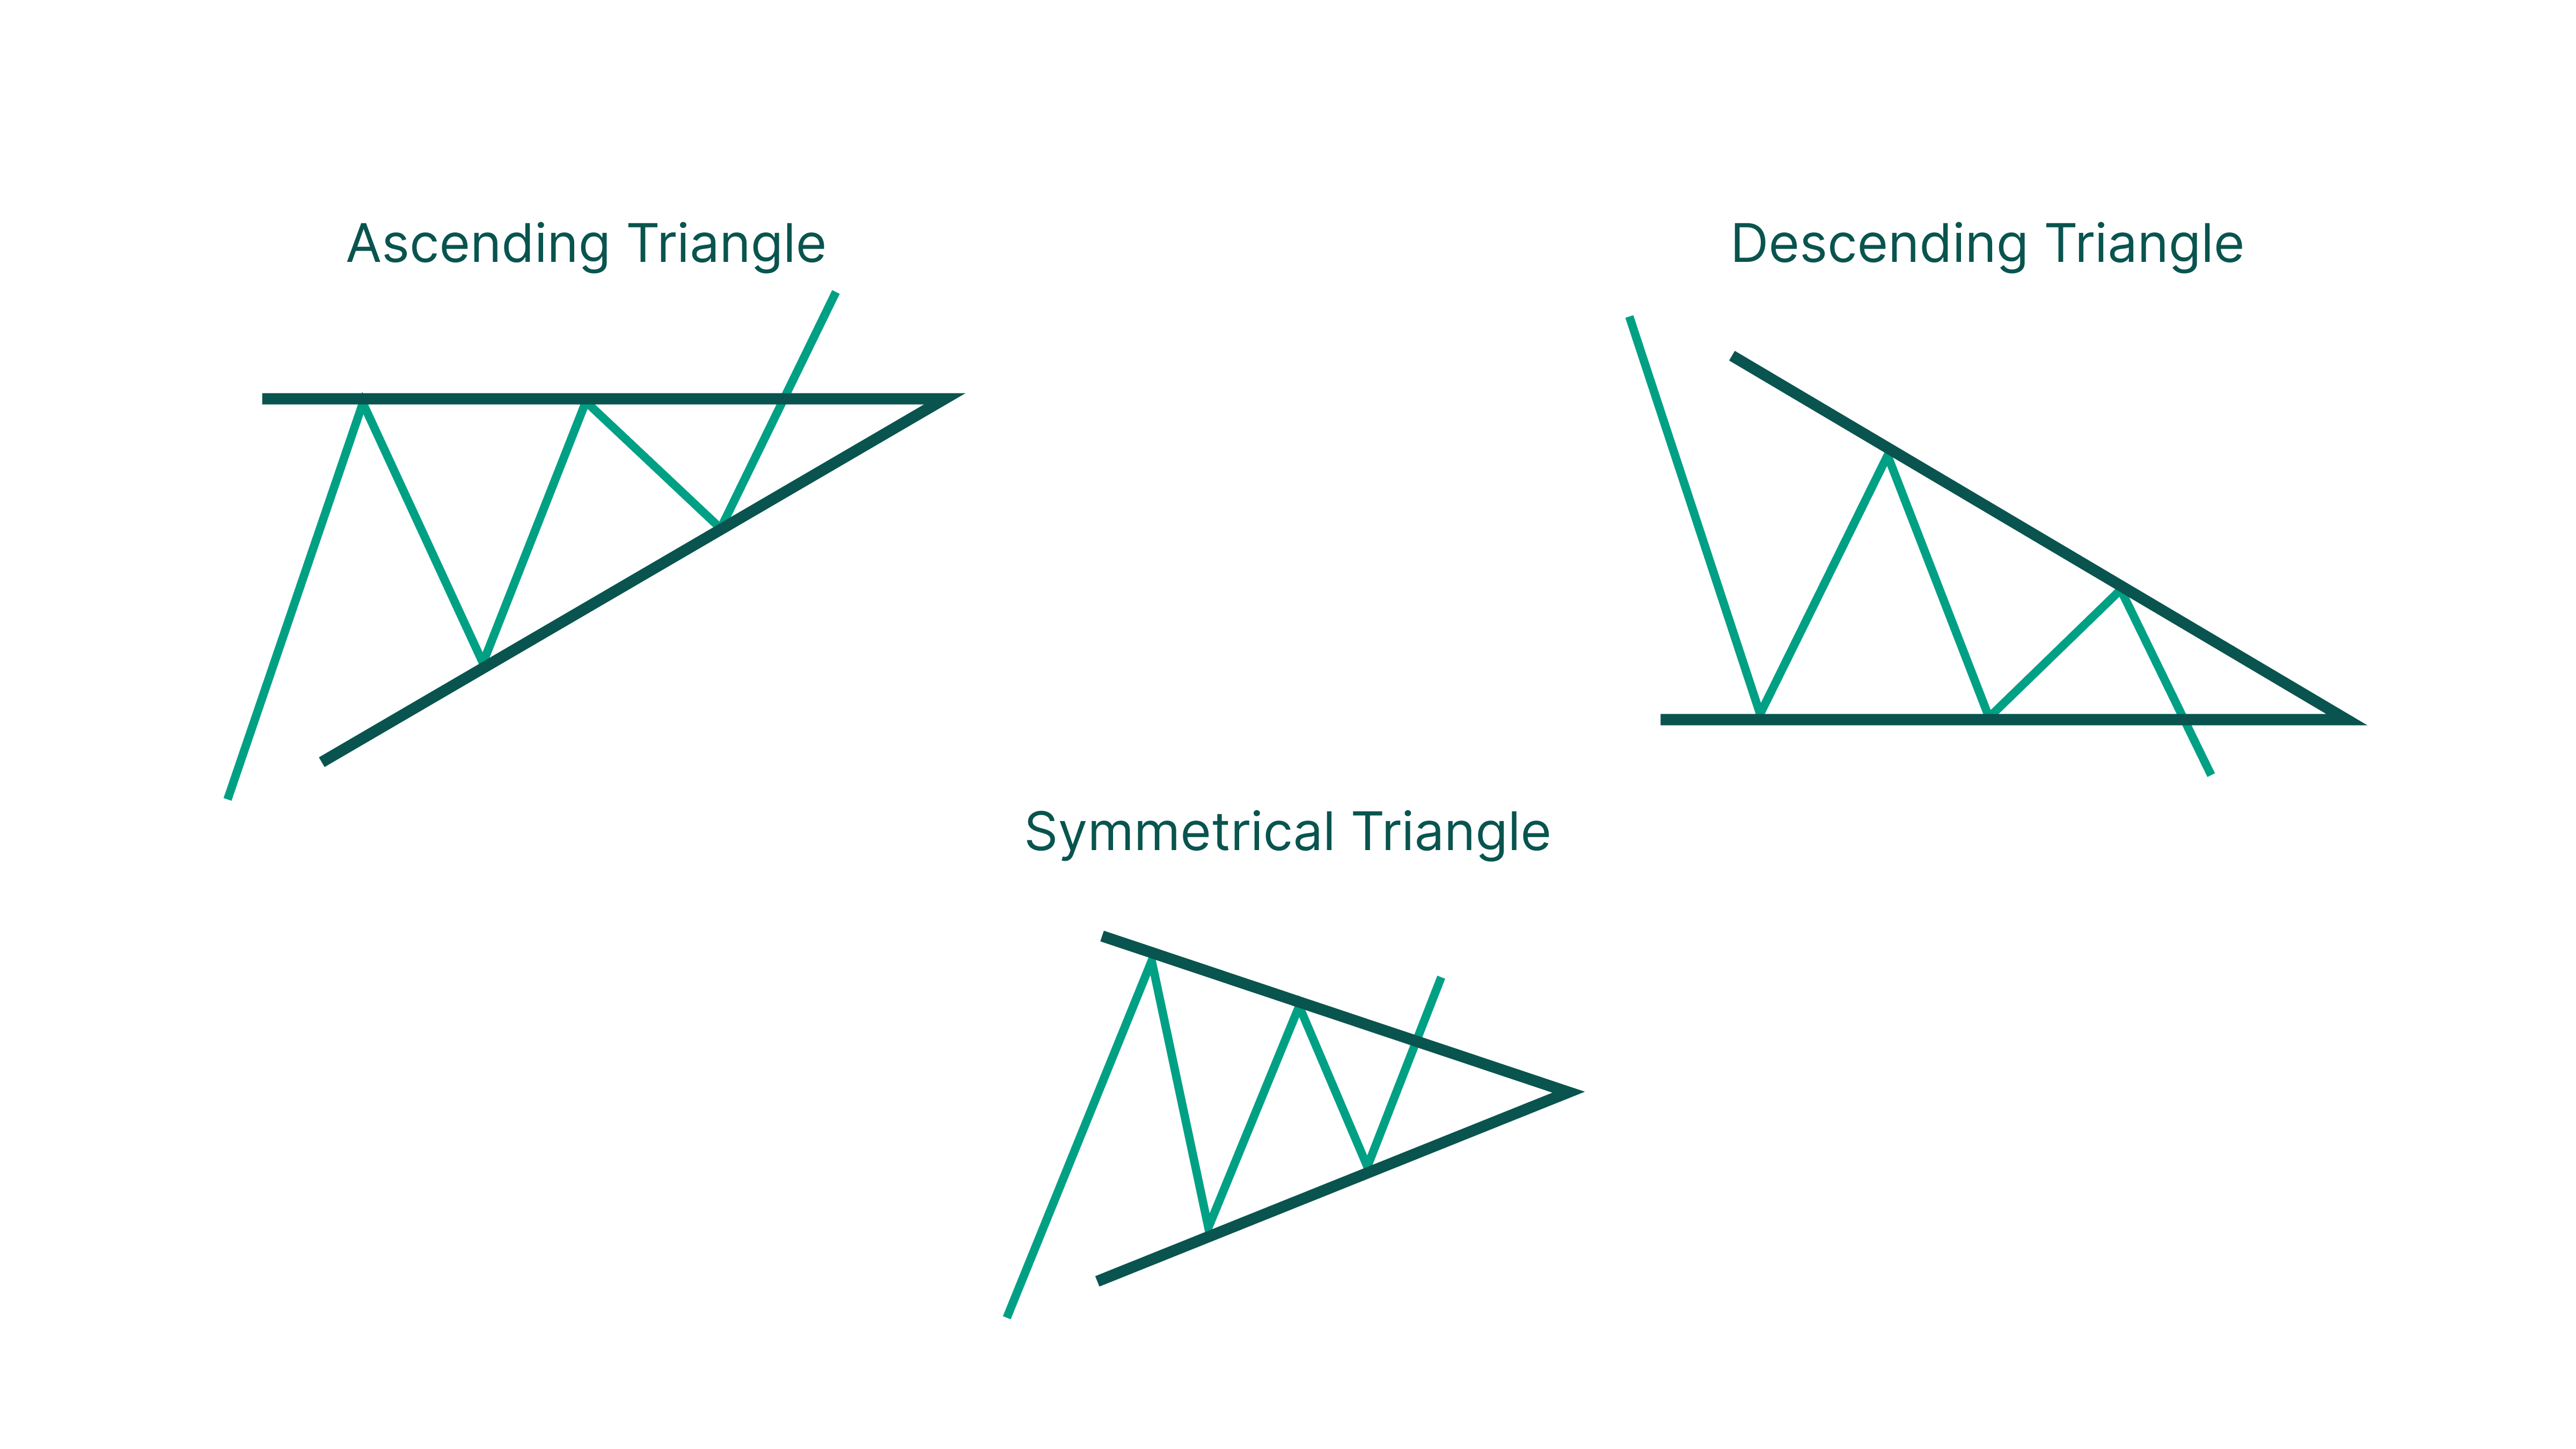 المثلثات Ascending Triangle